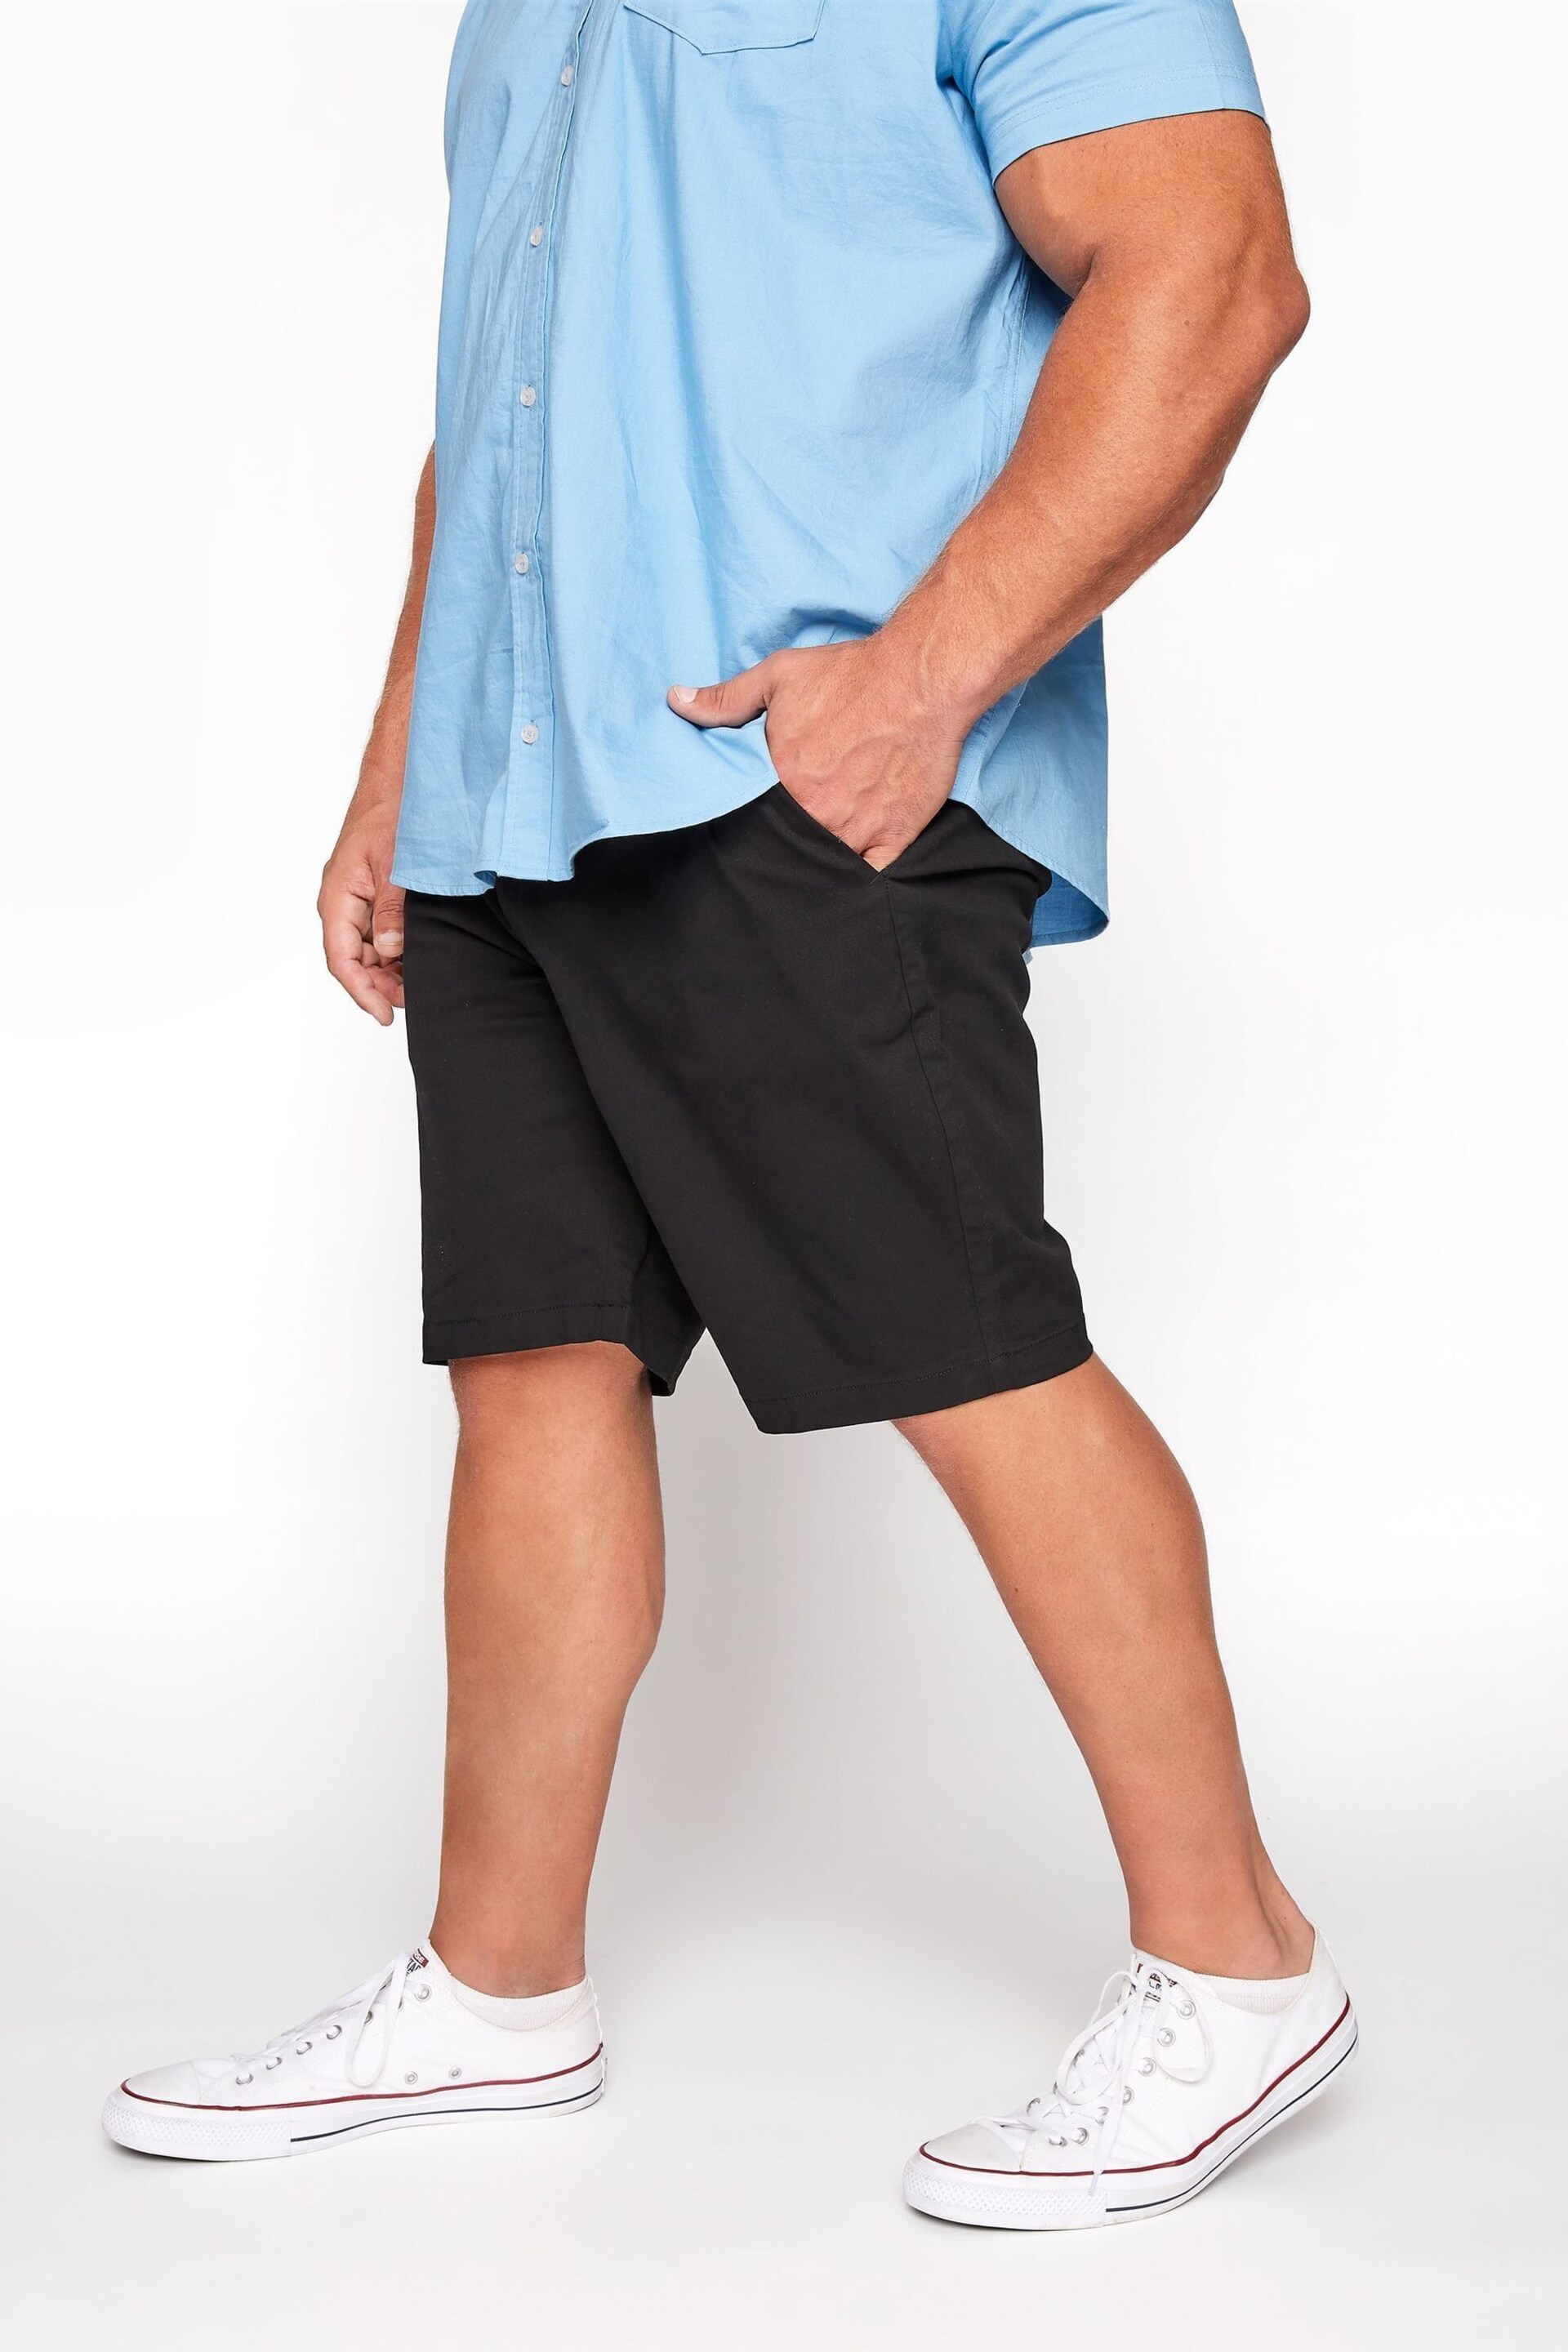 BadRhino Big & Tall Black Stretch Chino Shorts - Image 3 of 5